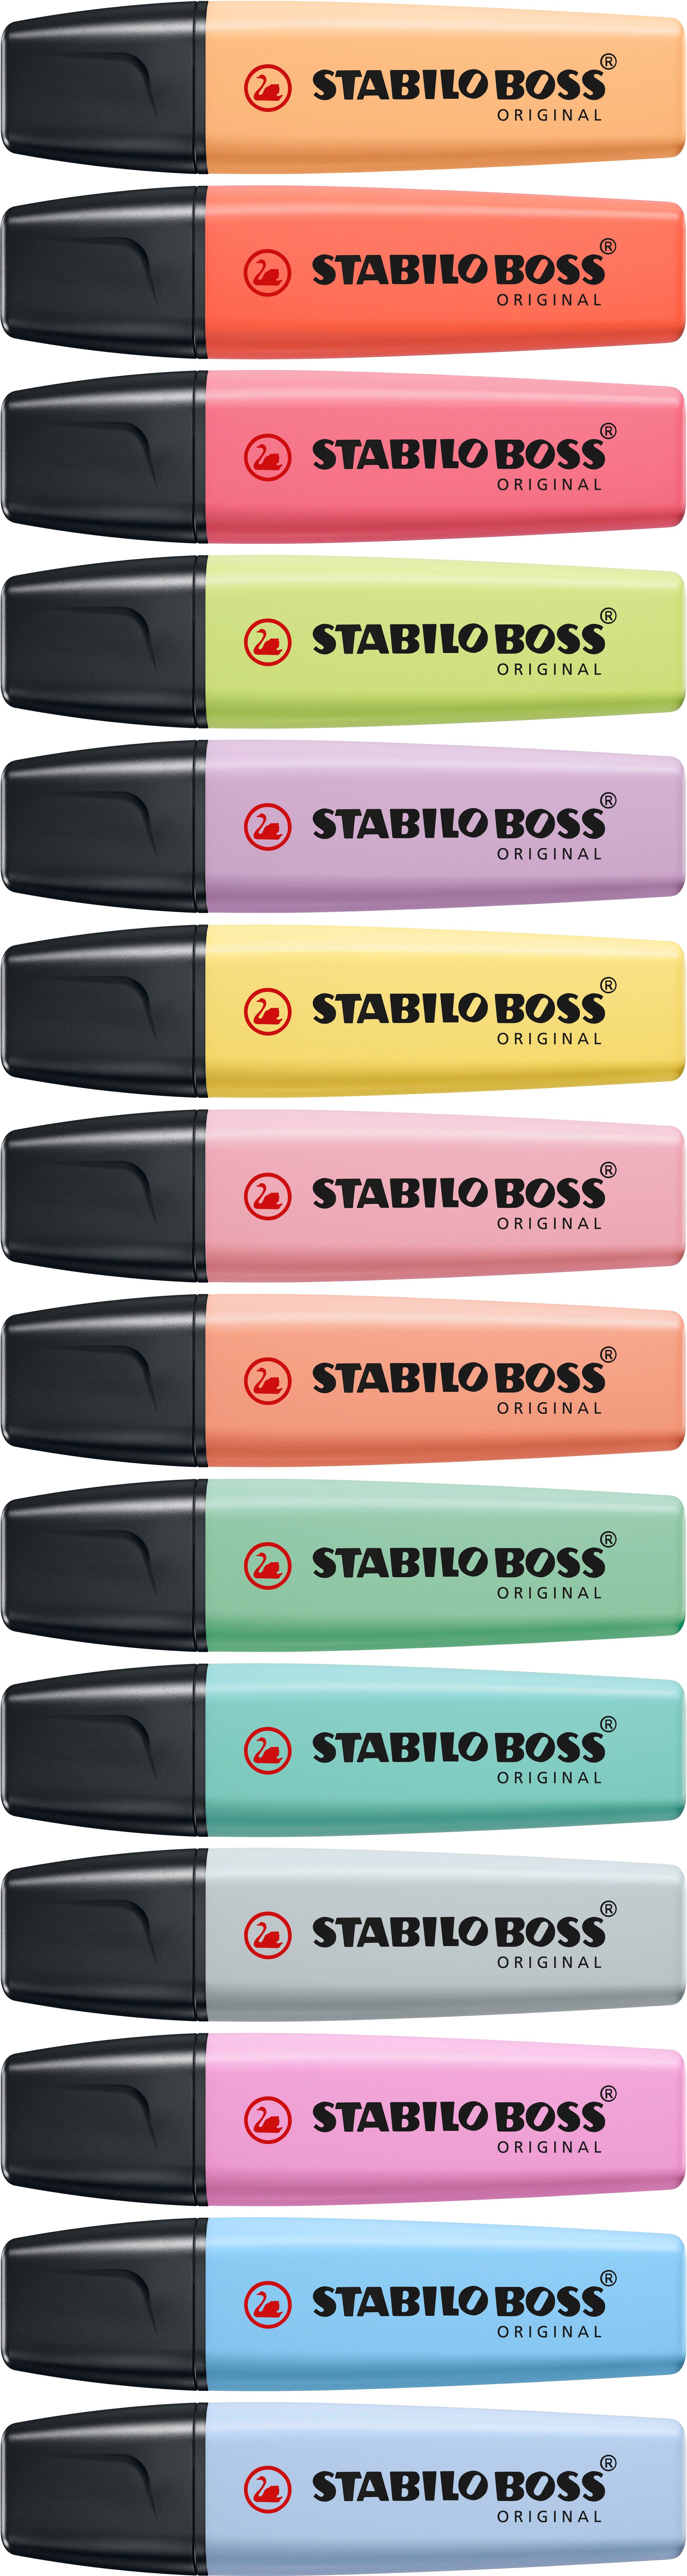 Text marker - STABILO BOSS ORIGINAL - 10er Pack- with ten different colors  Highlighting pen